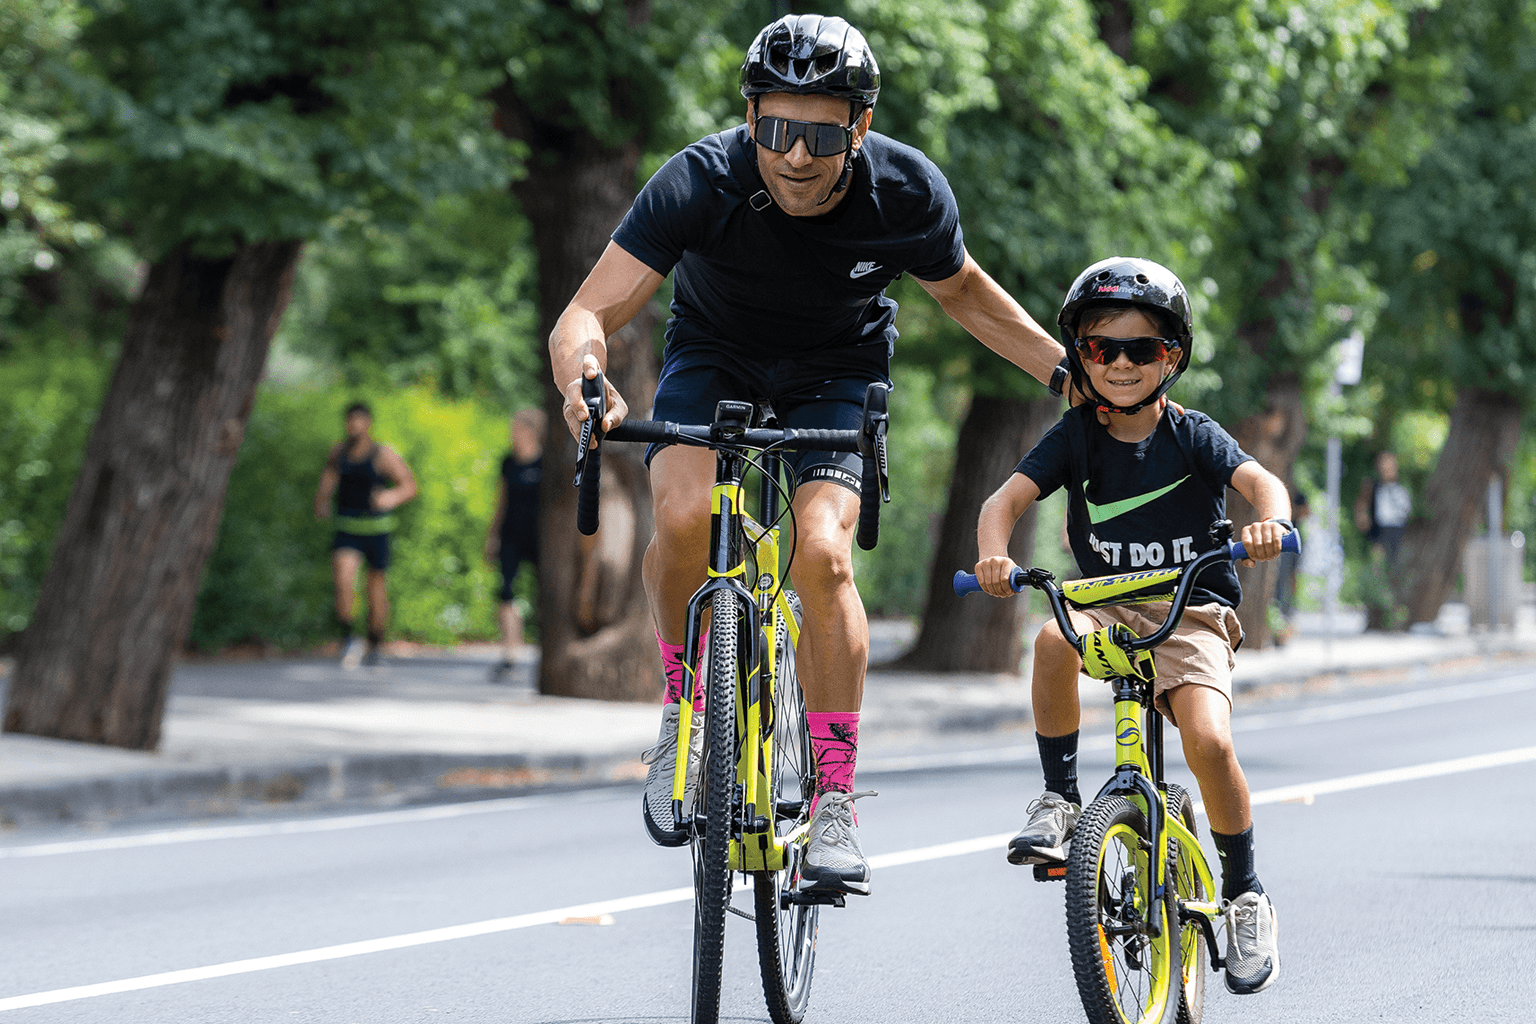 Adult male on road bike helps push a boy along on his bike